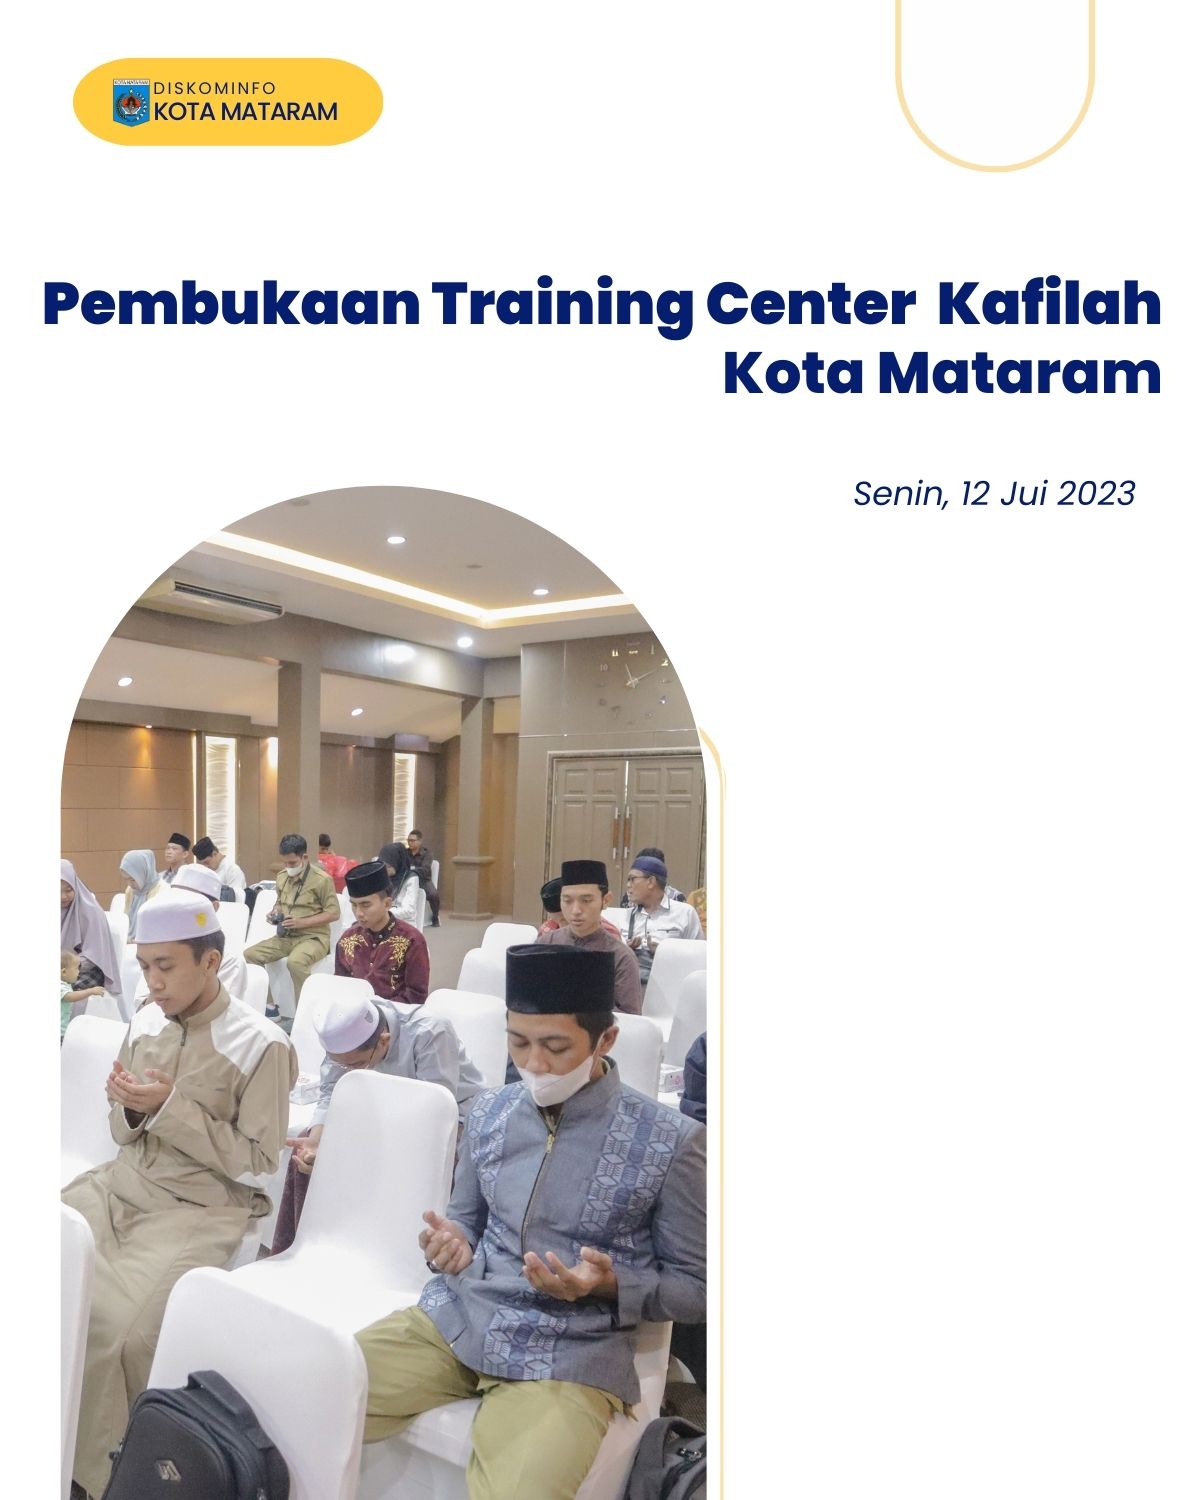 Pembukaan Training Center Kafilah Kota Mataram